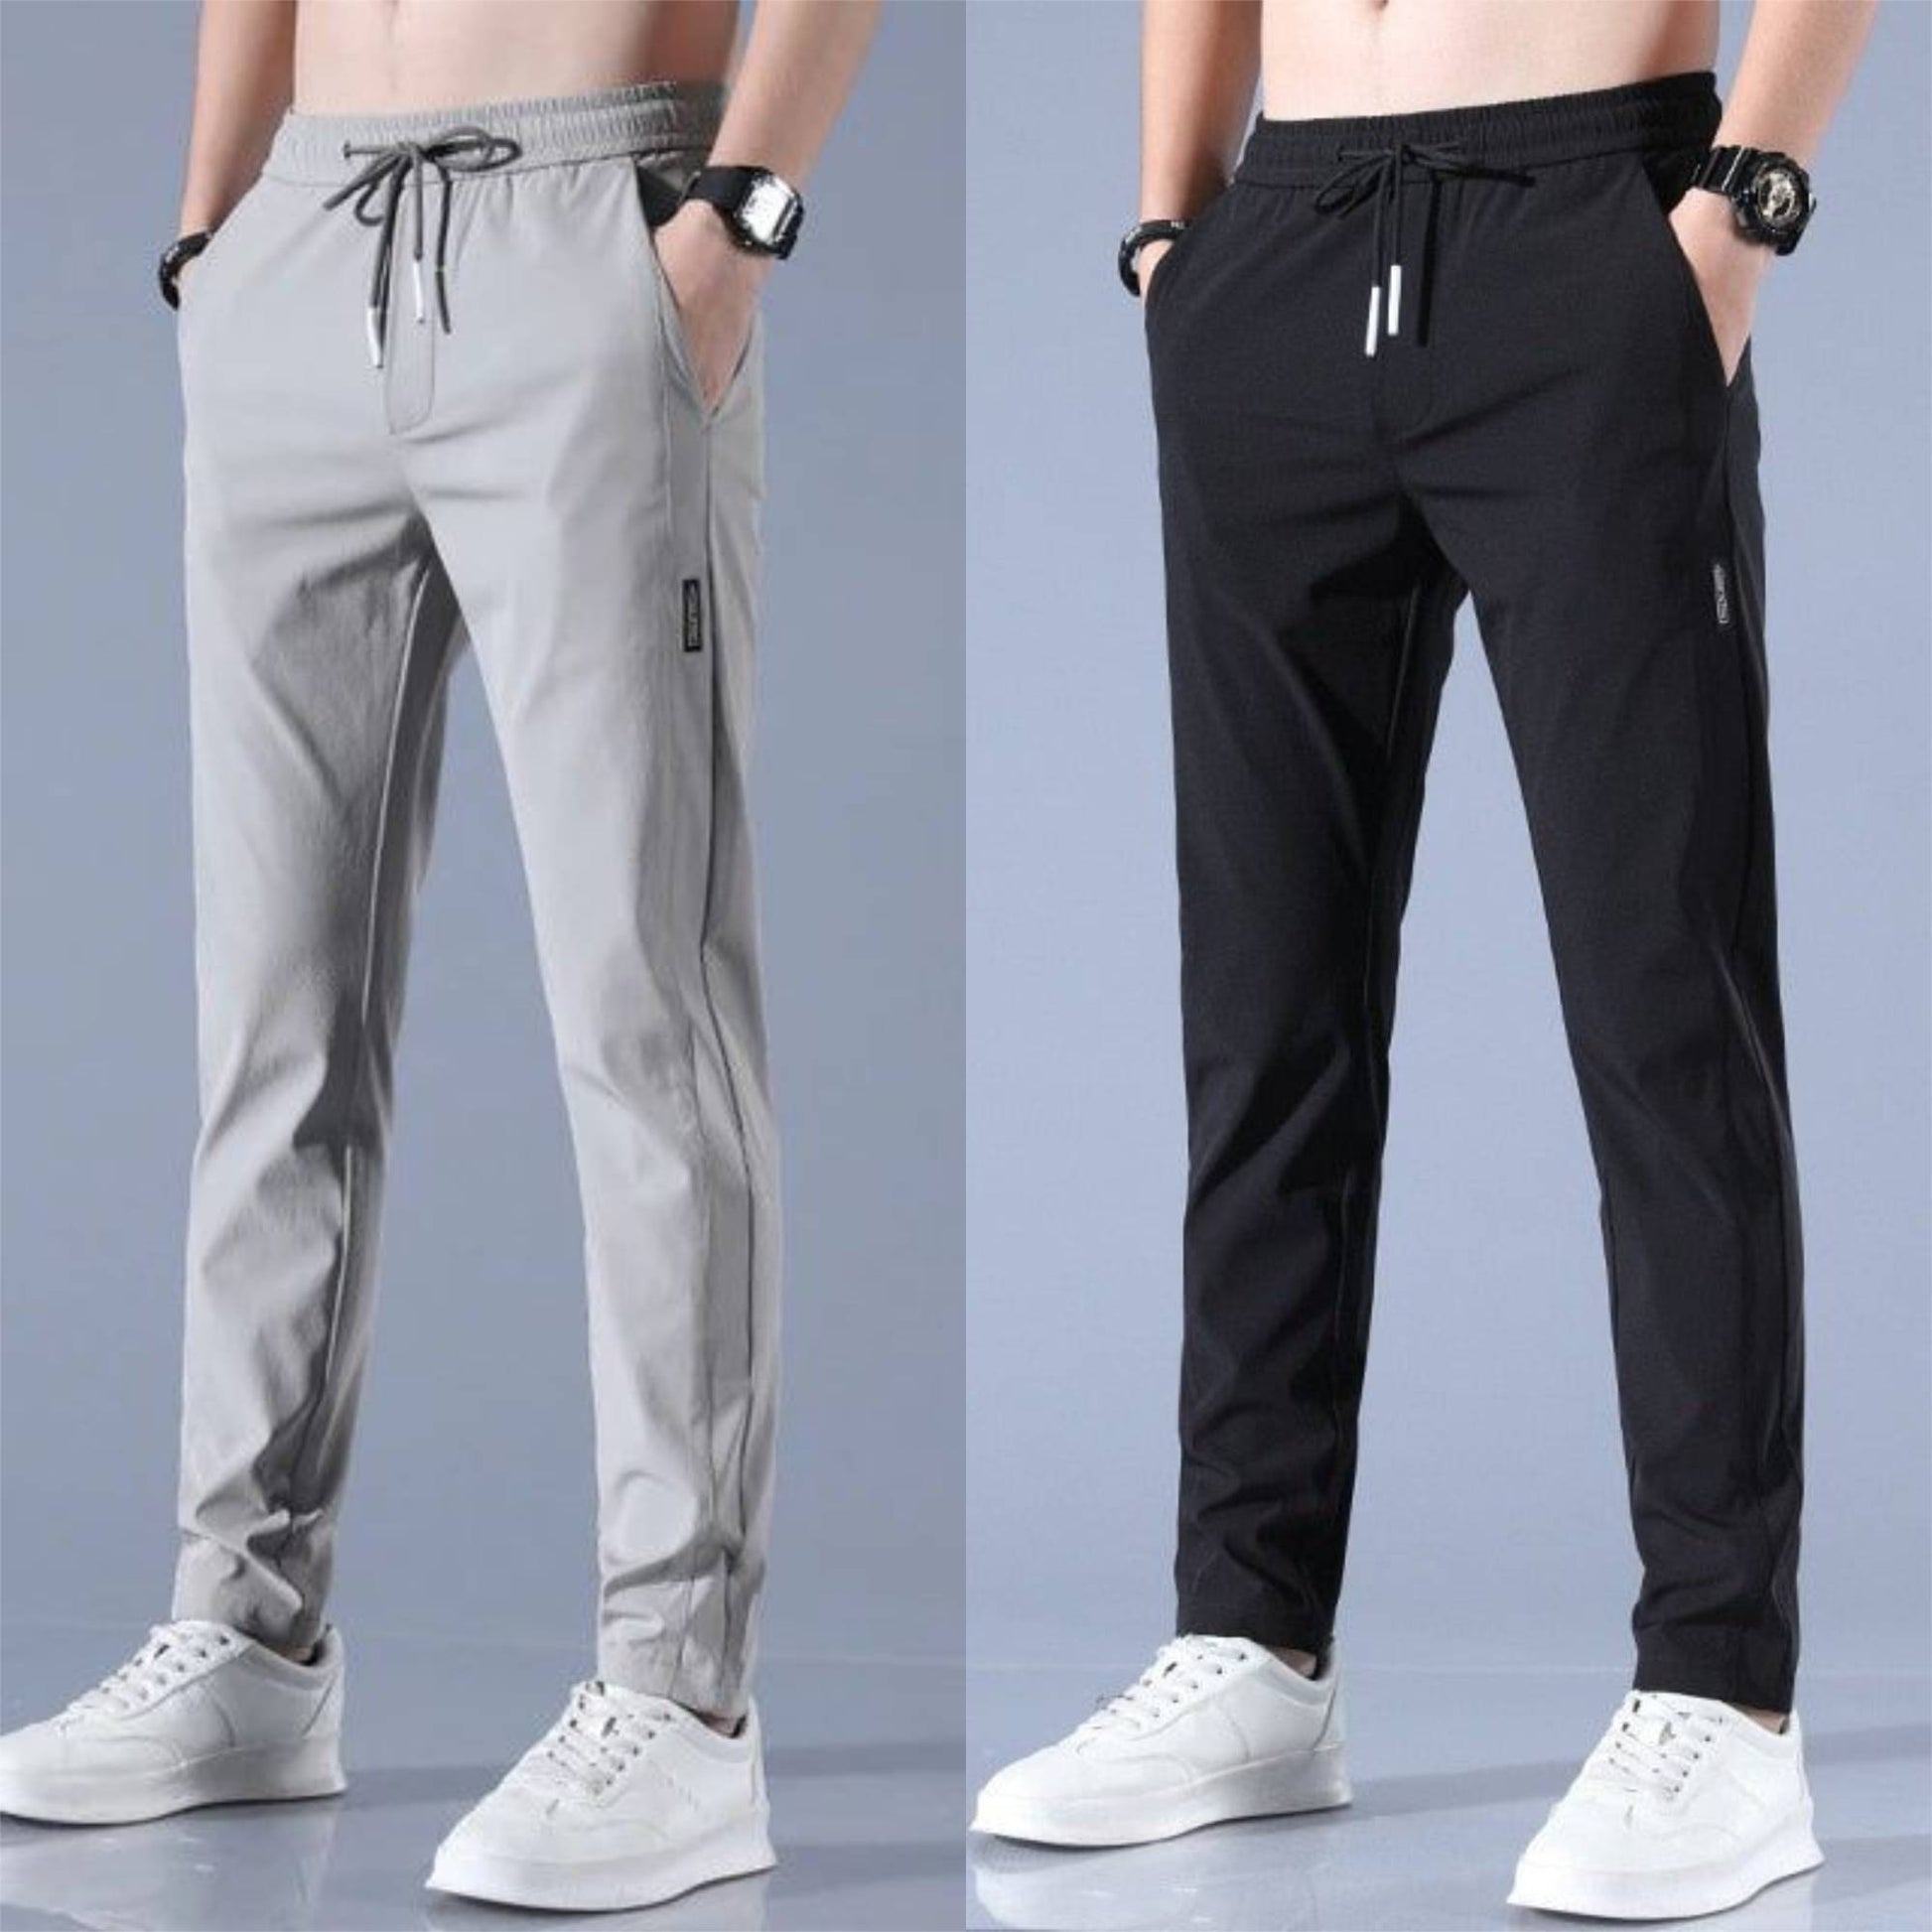 Stefan | SpeedDry Flexible Pants (1+1 FREE) - Gray / Black / L - AMVIM